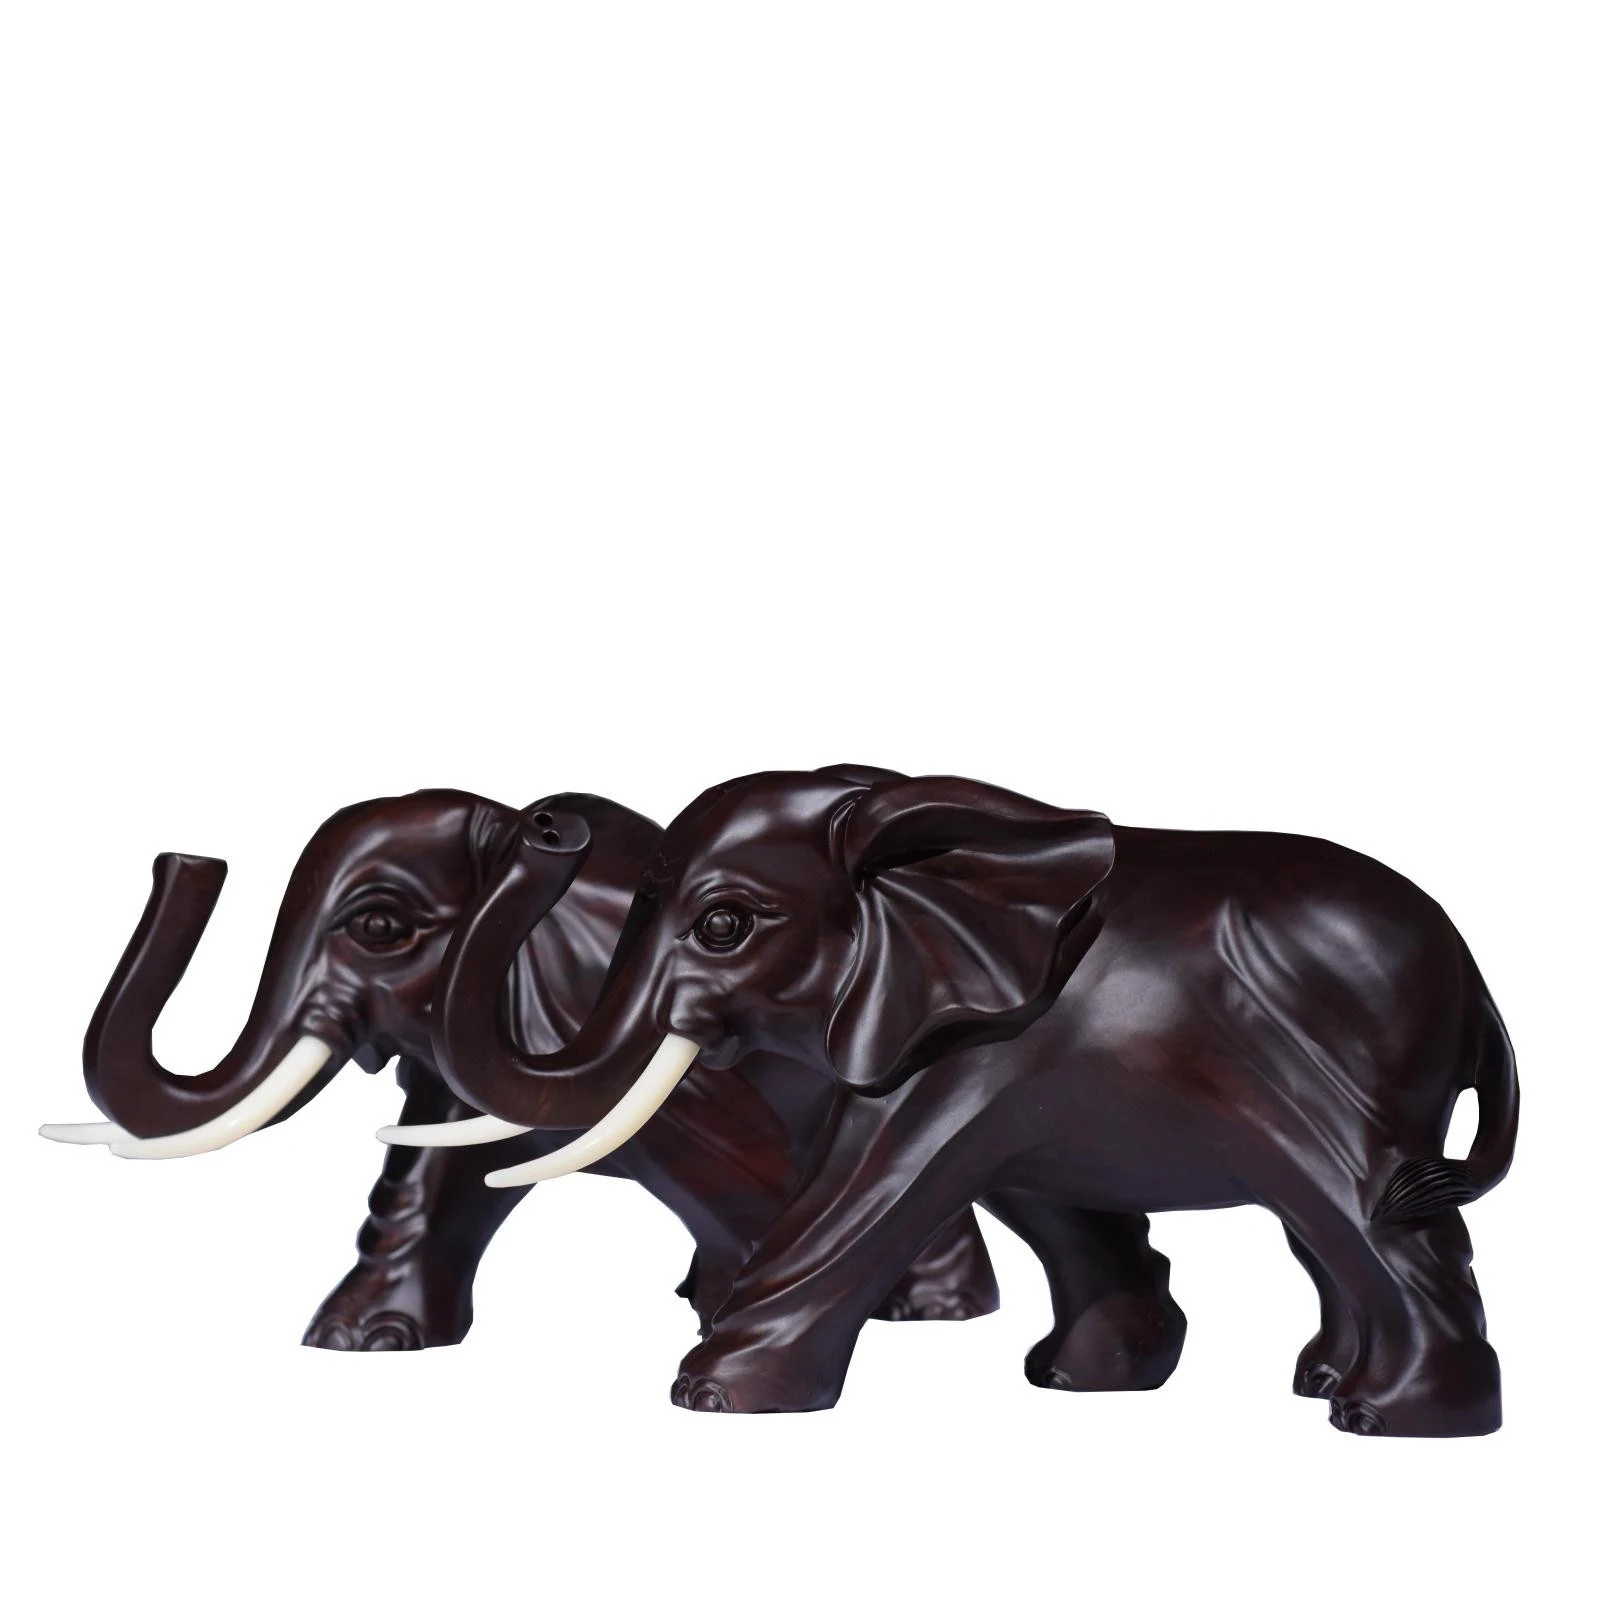 Carved Elephant Statue Ebony Wood Figurine Hand Carving Sculpture Elephants New 